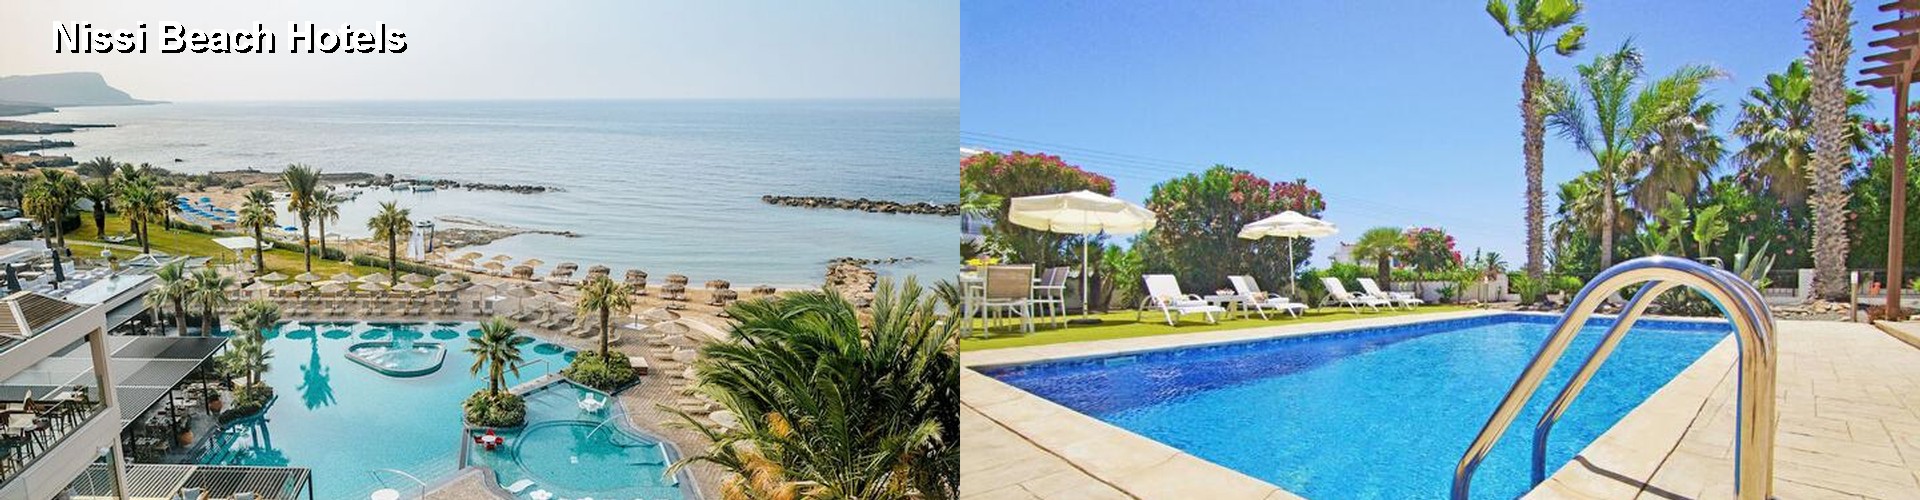 5 Best Hotels near Nissi Beach